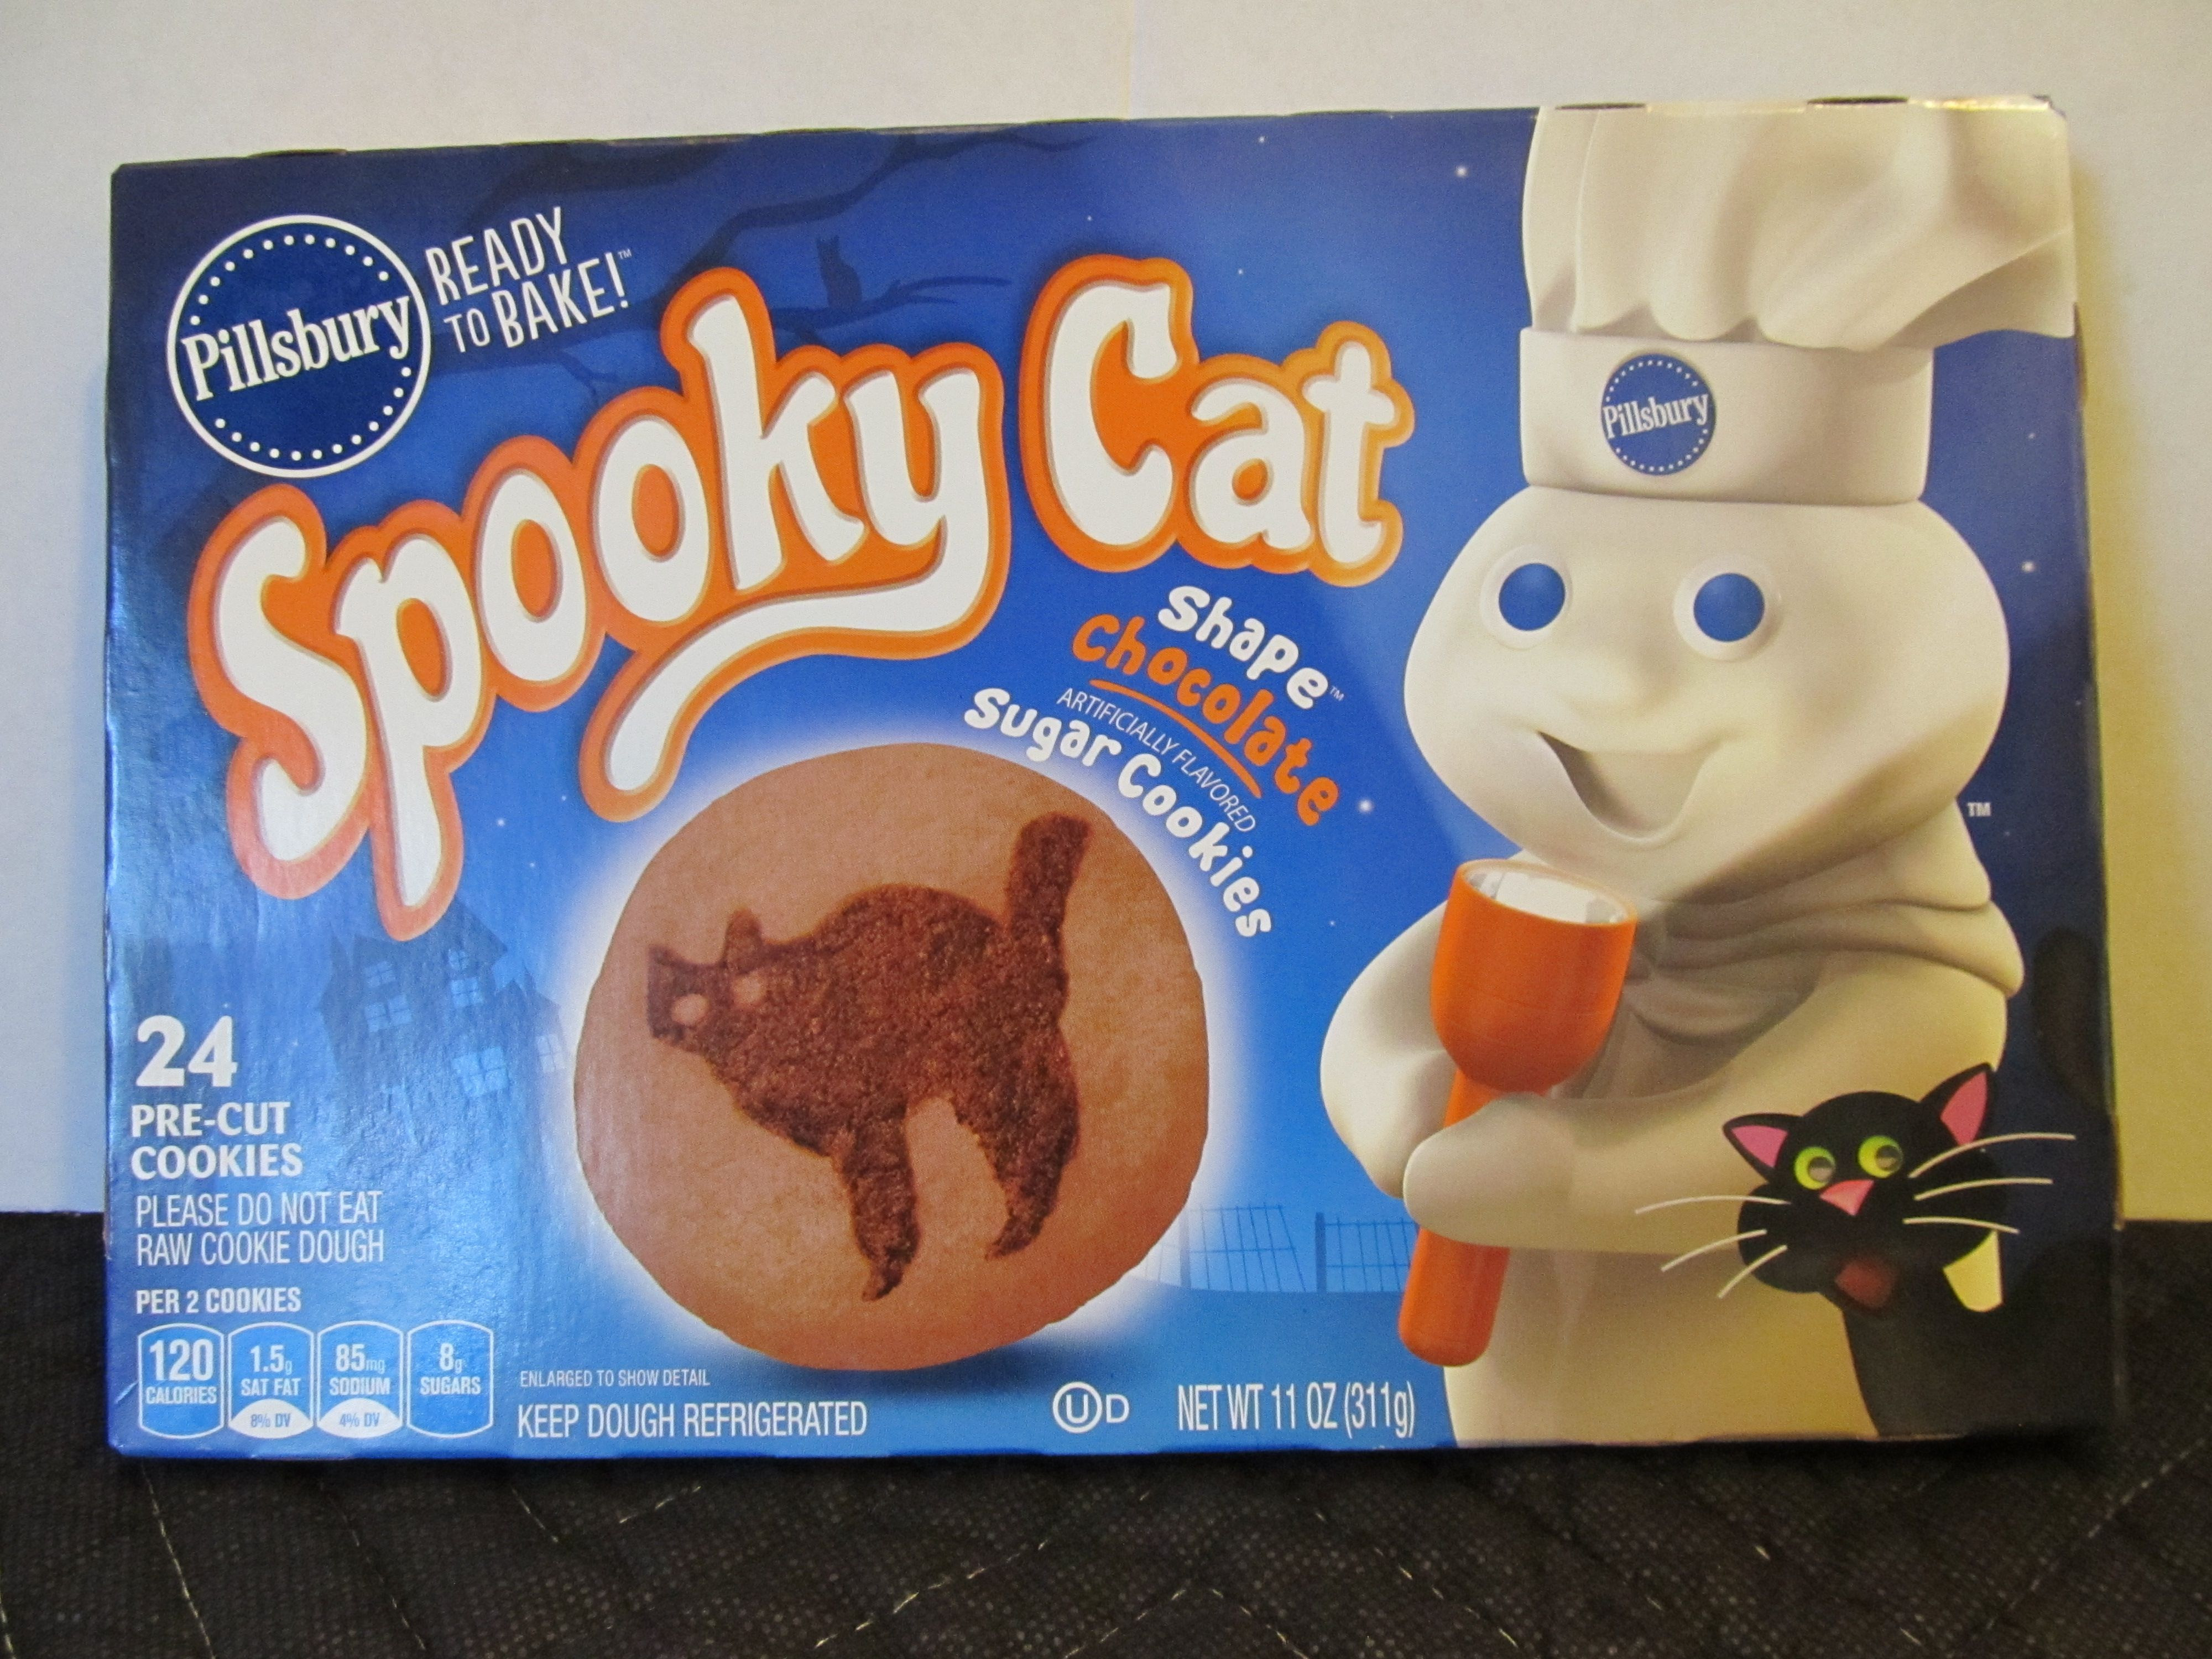 Halloween Sugar Cookies Pillsbury
 Pillsbury Halloween Cookies Spooky Cat 2014 Package